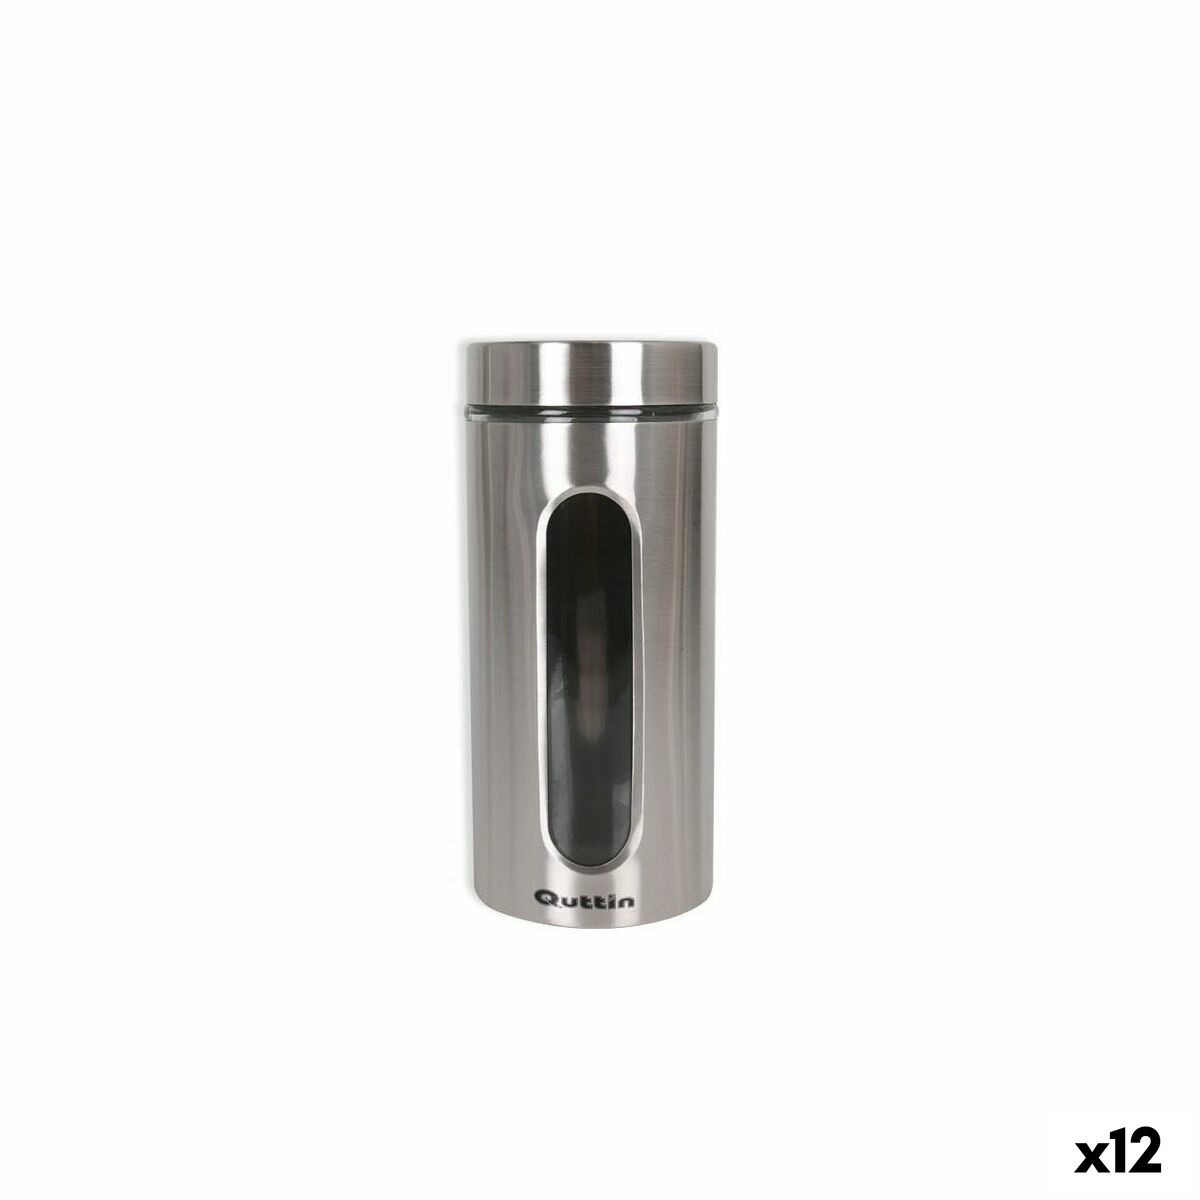 Vaso Quttin Trasparente Argentato Vetro Acciaio 1,5 L 10 x 10 x 22,8 cm (12 Unità)